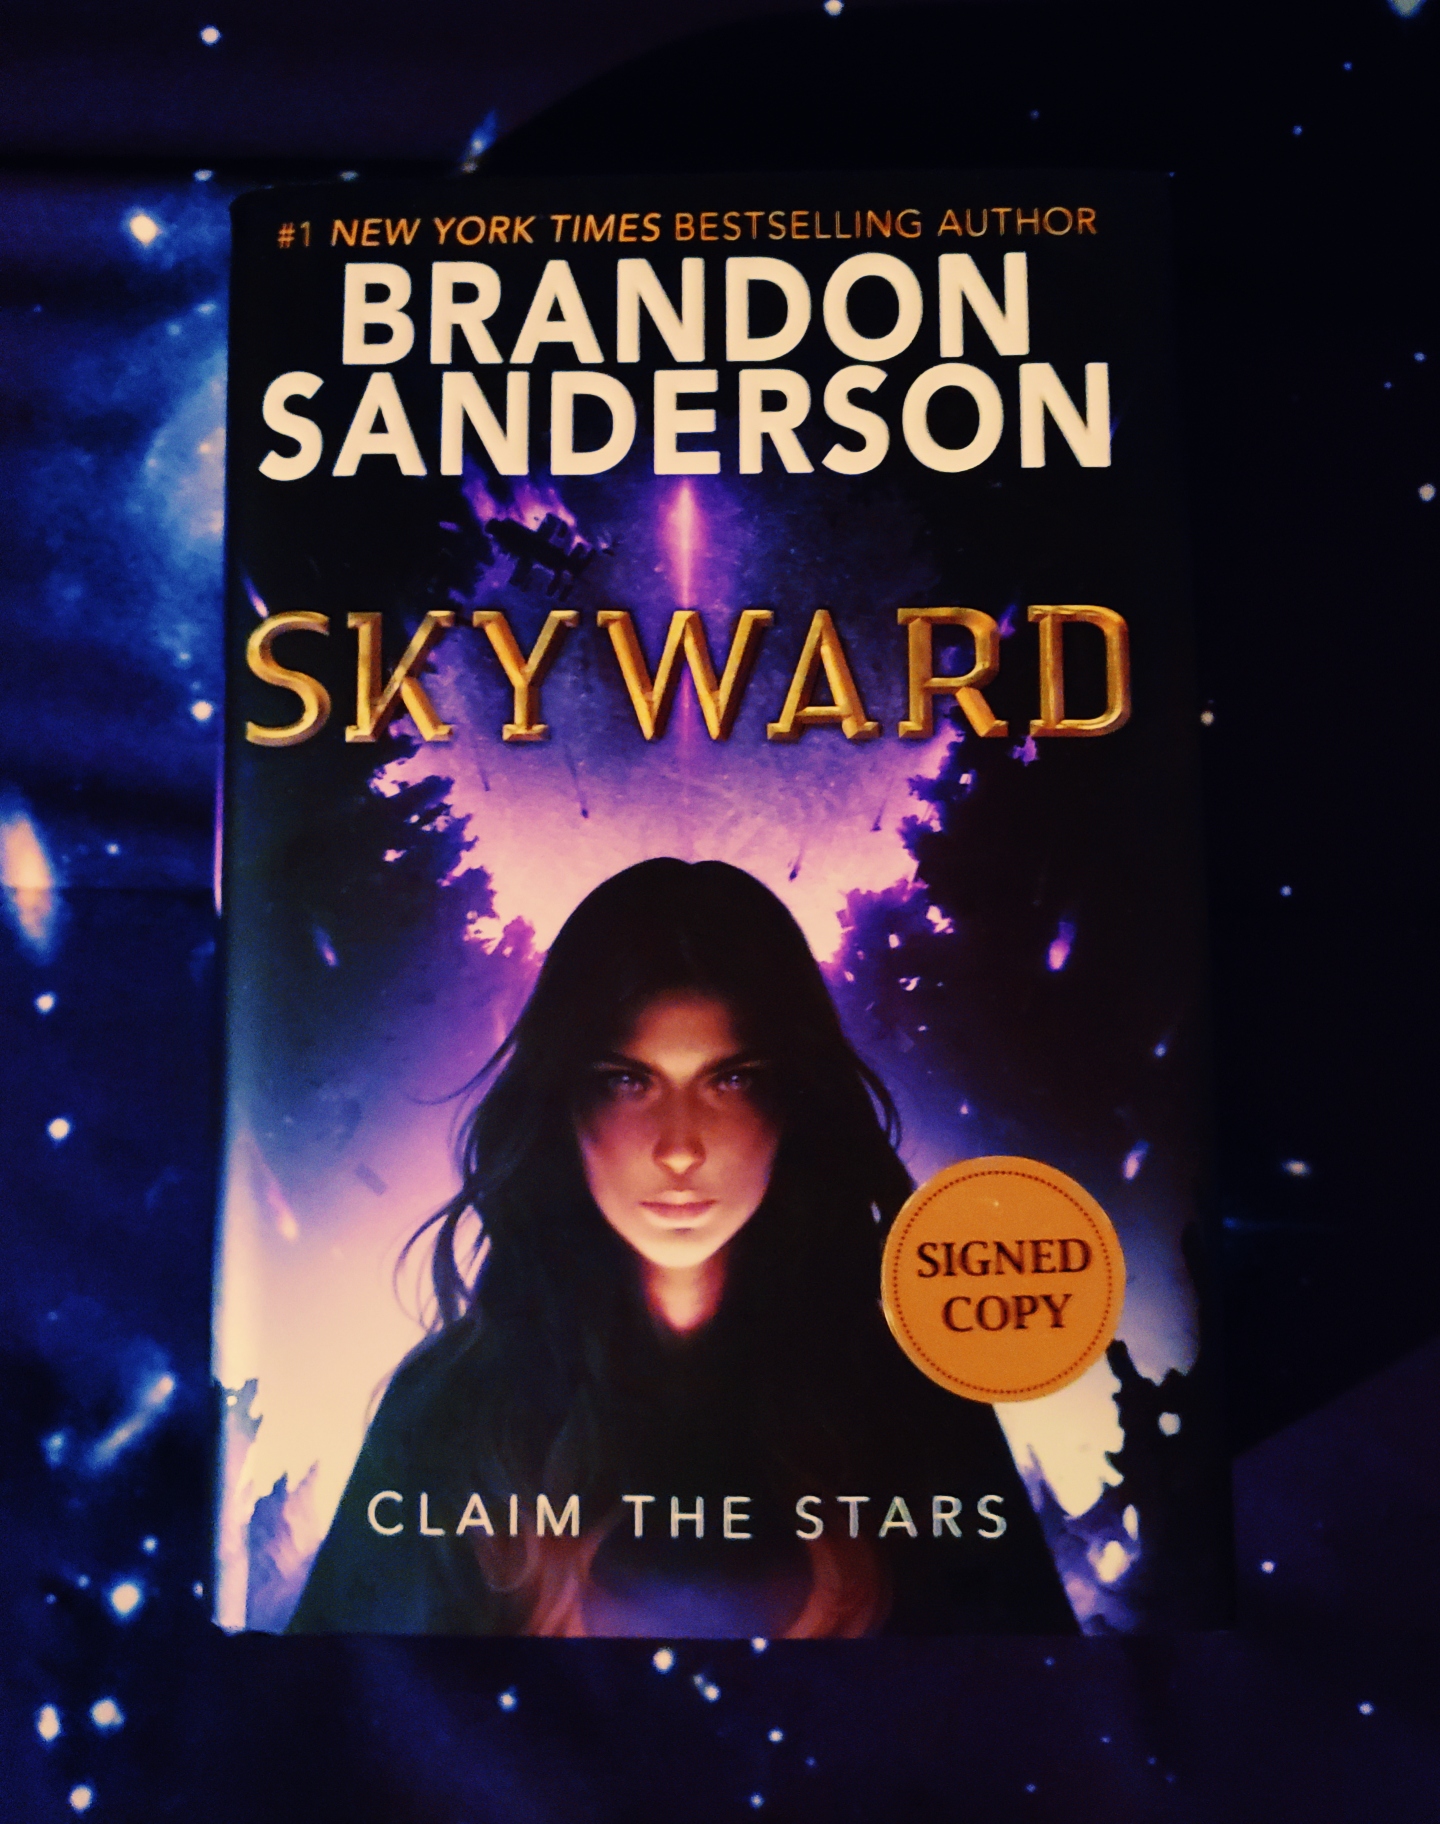 Brandon Sanderson Looks 'Skyward' with New Books for Young Readers, brandon  sanderson 